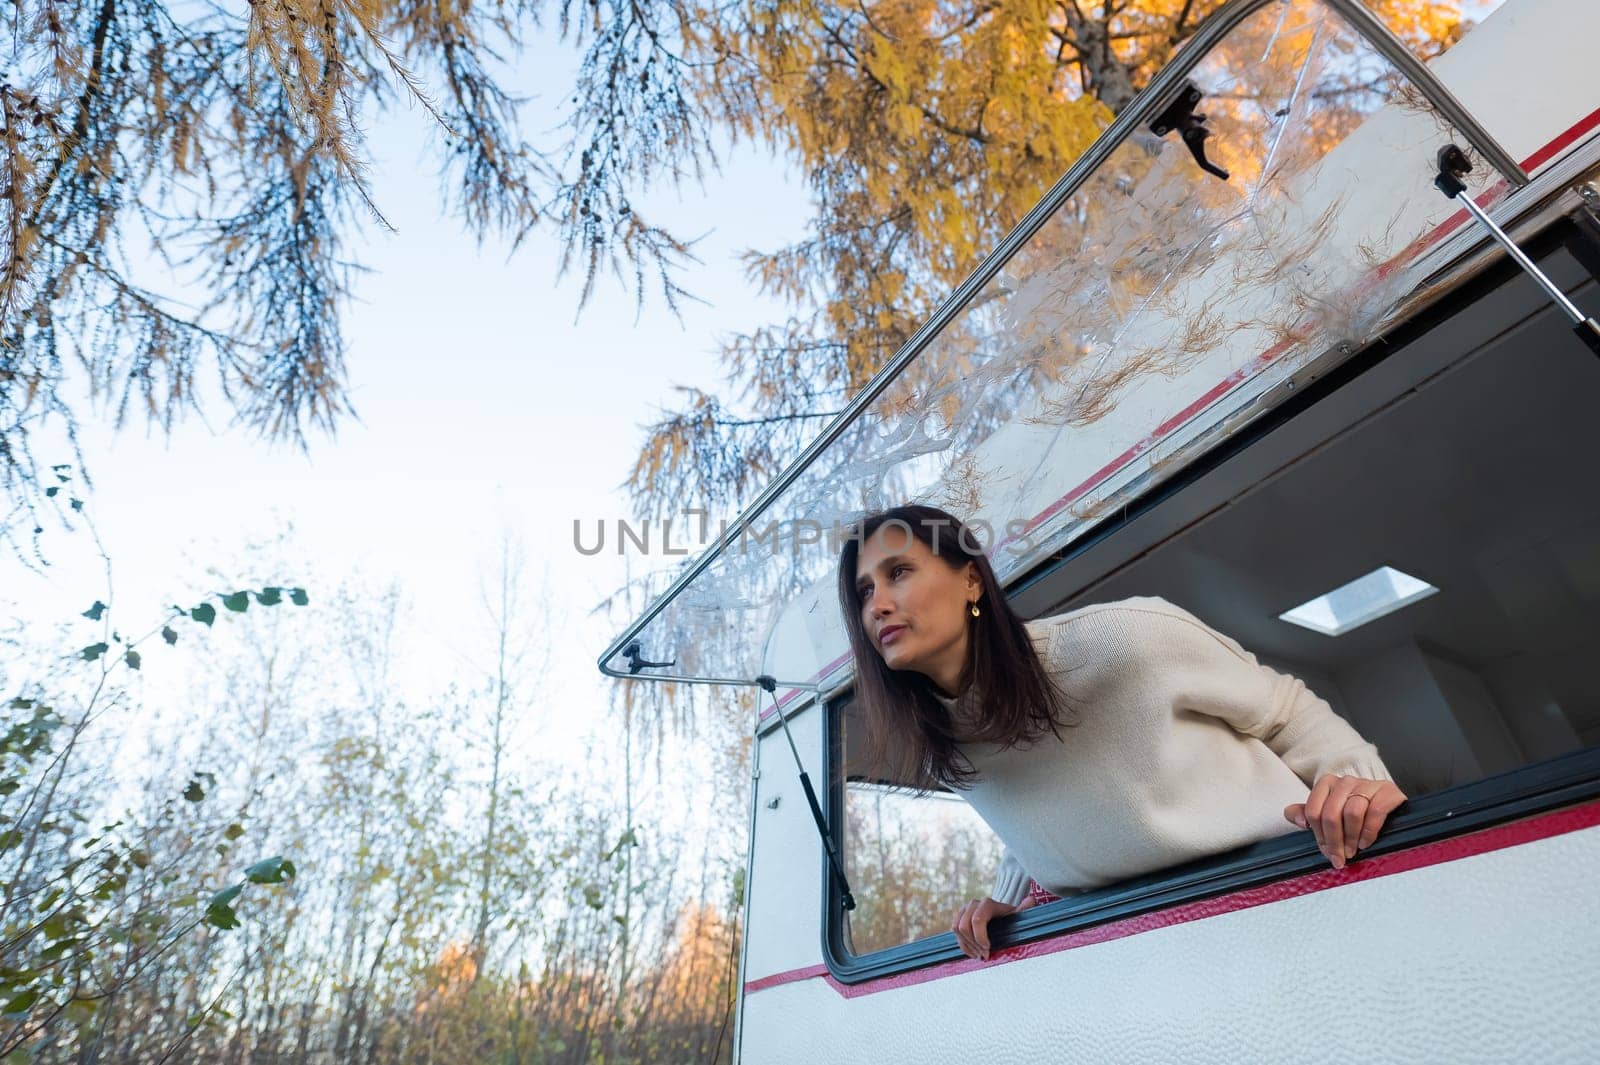 Caucasian woman peeking out of camper window. by mrwed54